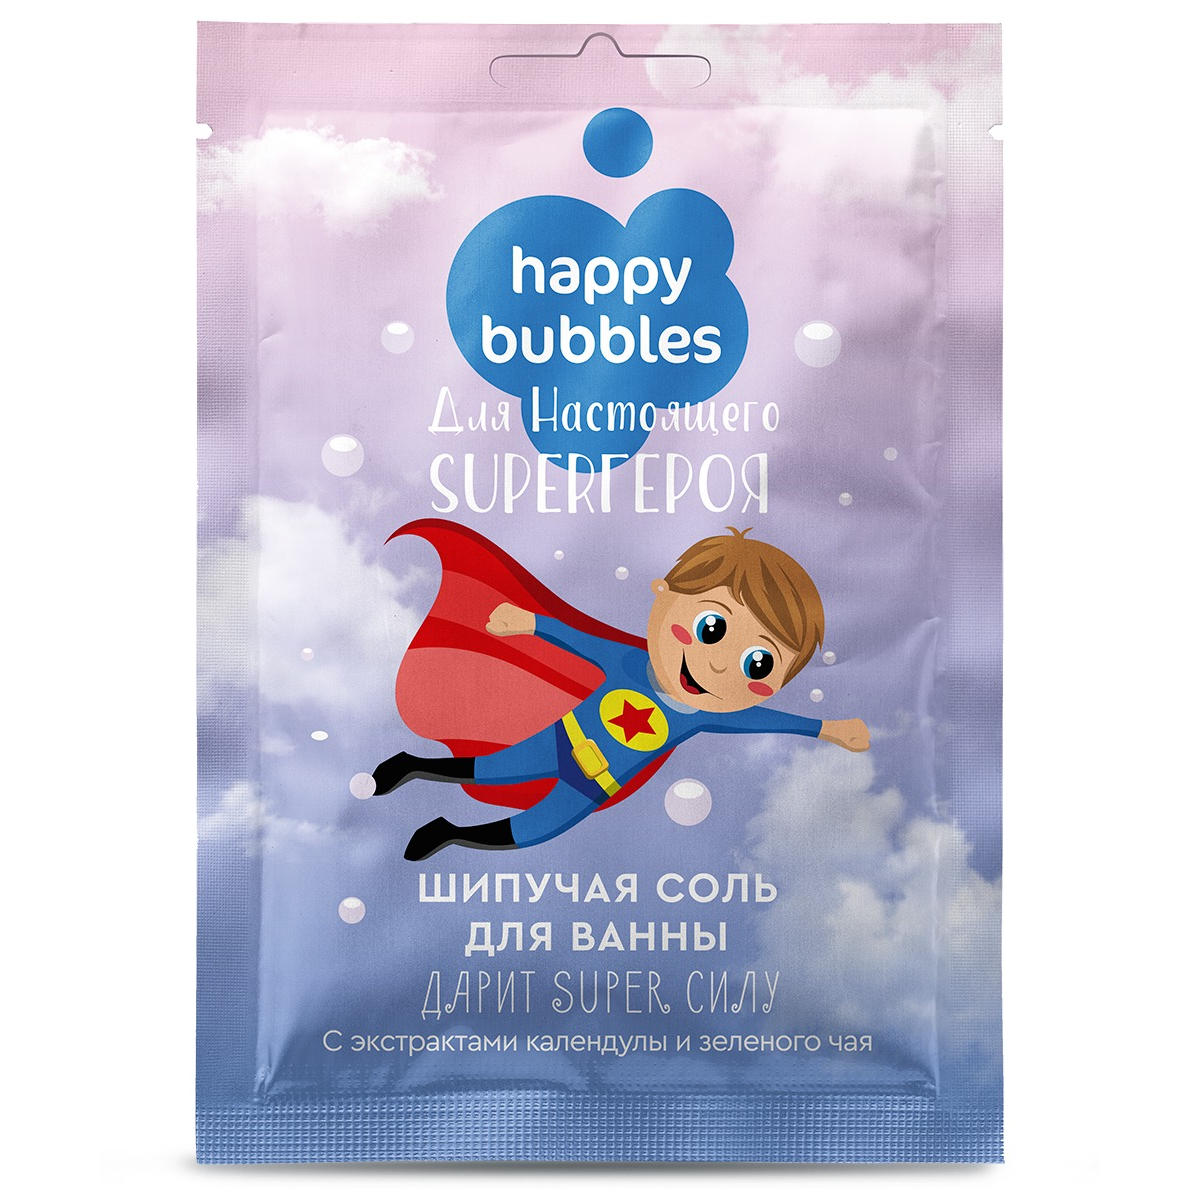 Соль для ванны Happy bubbles для настоя Super героя 100г соль для ванны шиммер